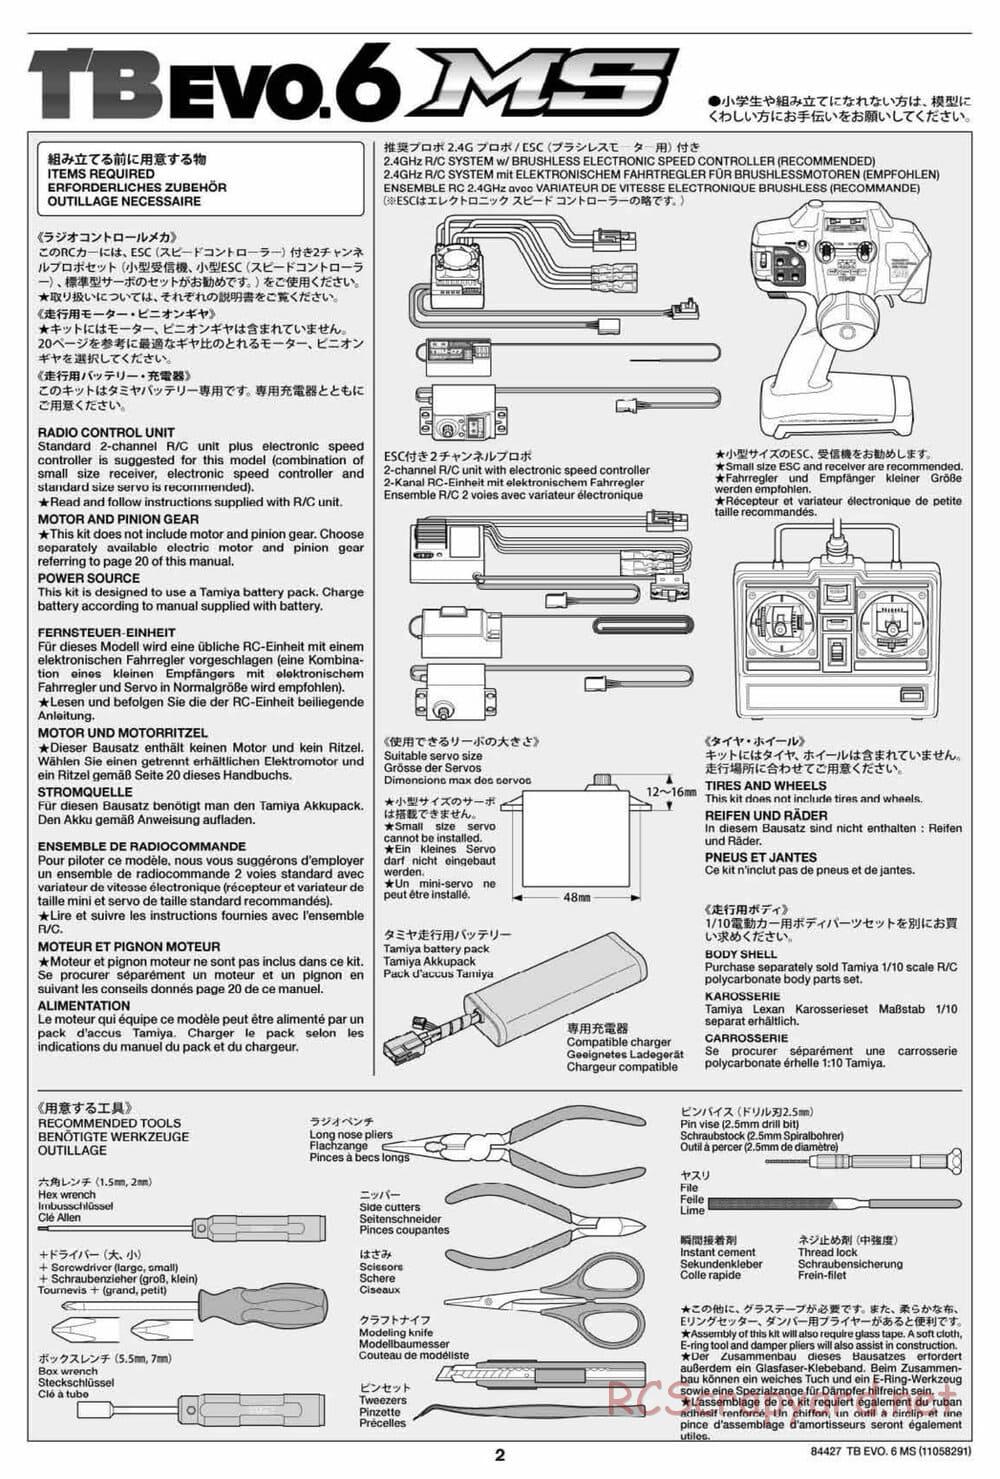 Tamiya - TB Evo.6 MS Chassis - Manual - Page 2